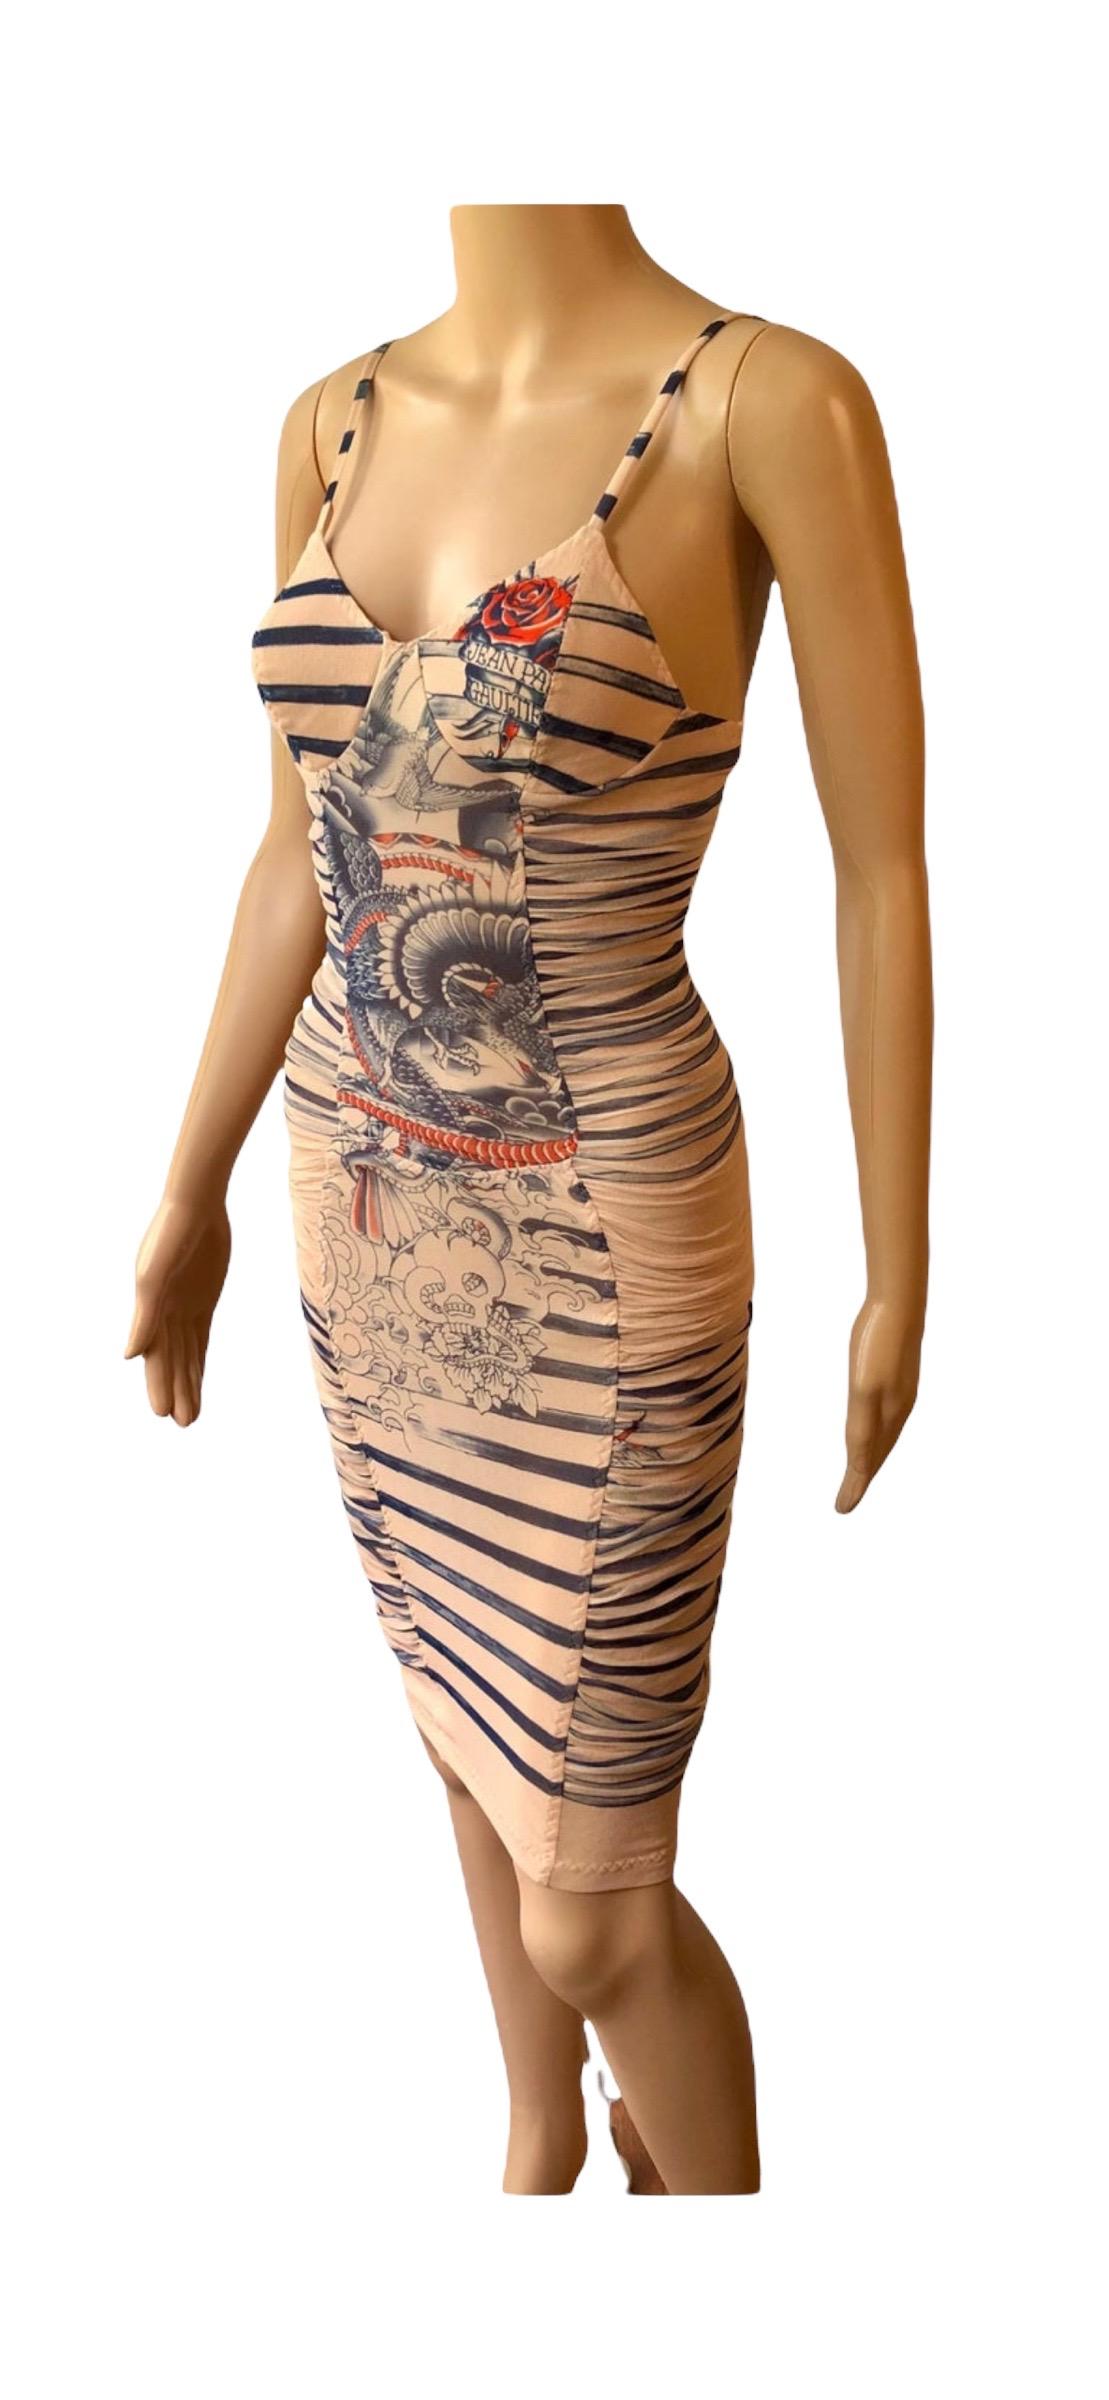 Jean Paul Gaultier Soleil S/S 2012 Tattoo Print Semi-Sheer Mesh Bodycon Dress 7